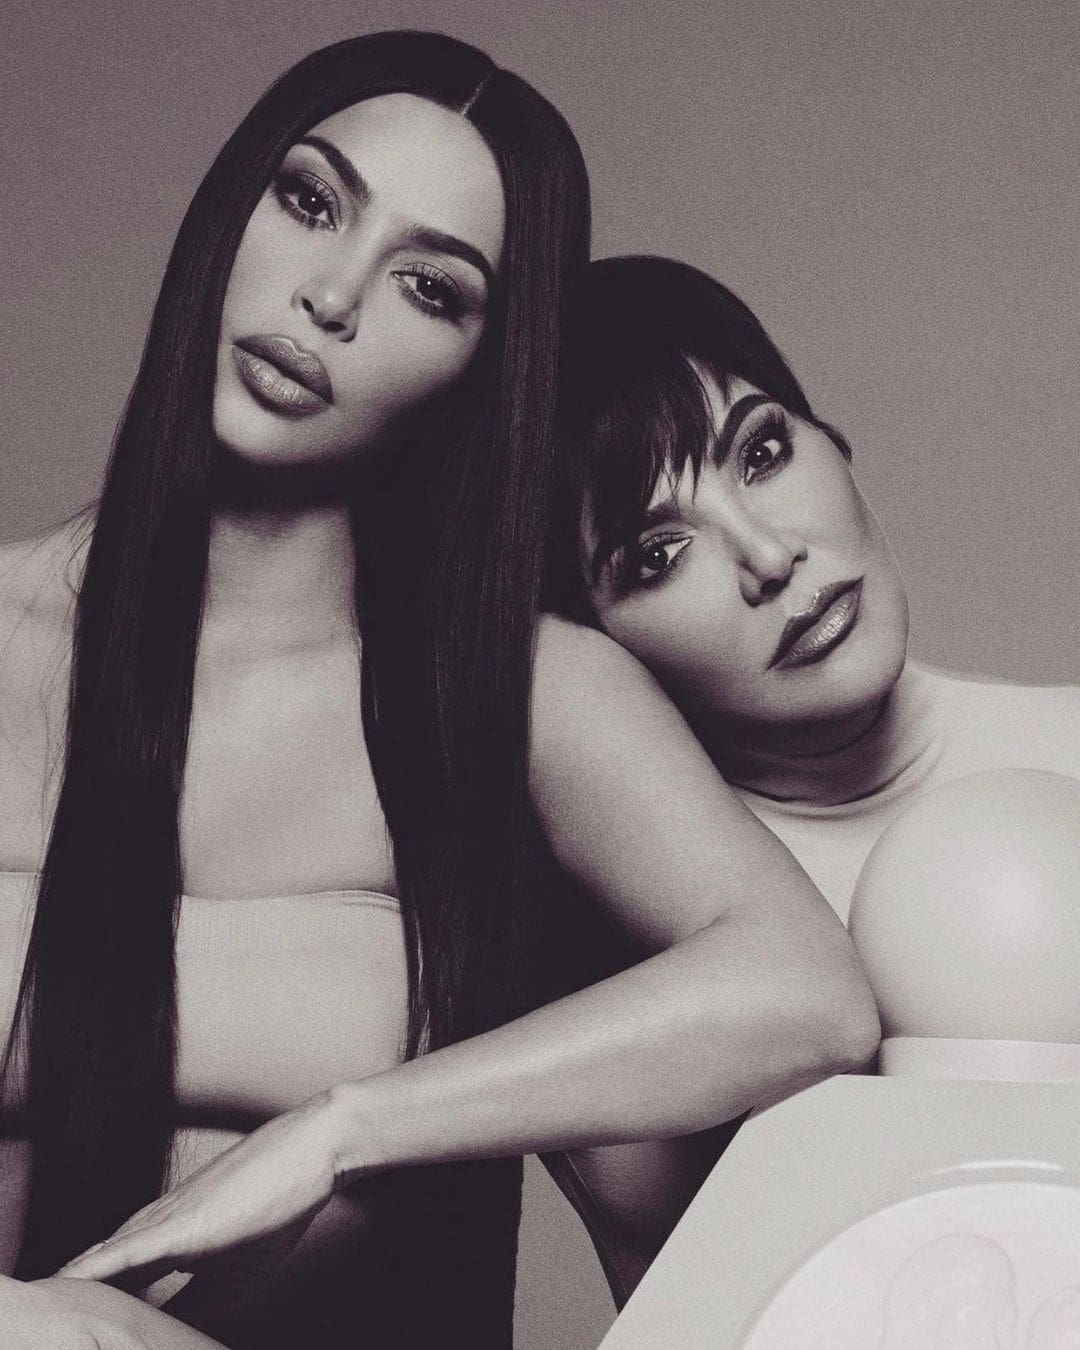 Kim Kardashian Twins With Mom Kris Jenner On Her 65th Birthday